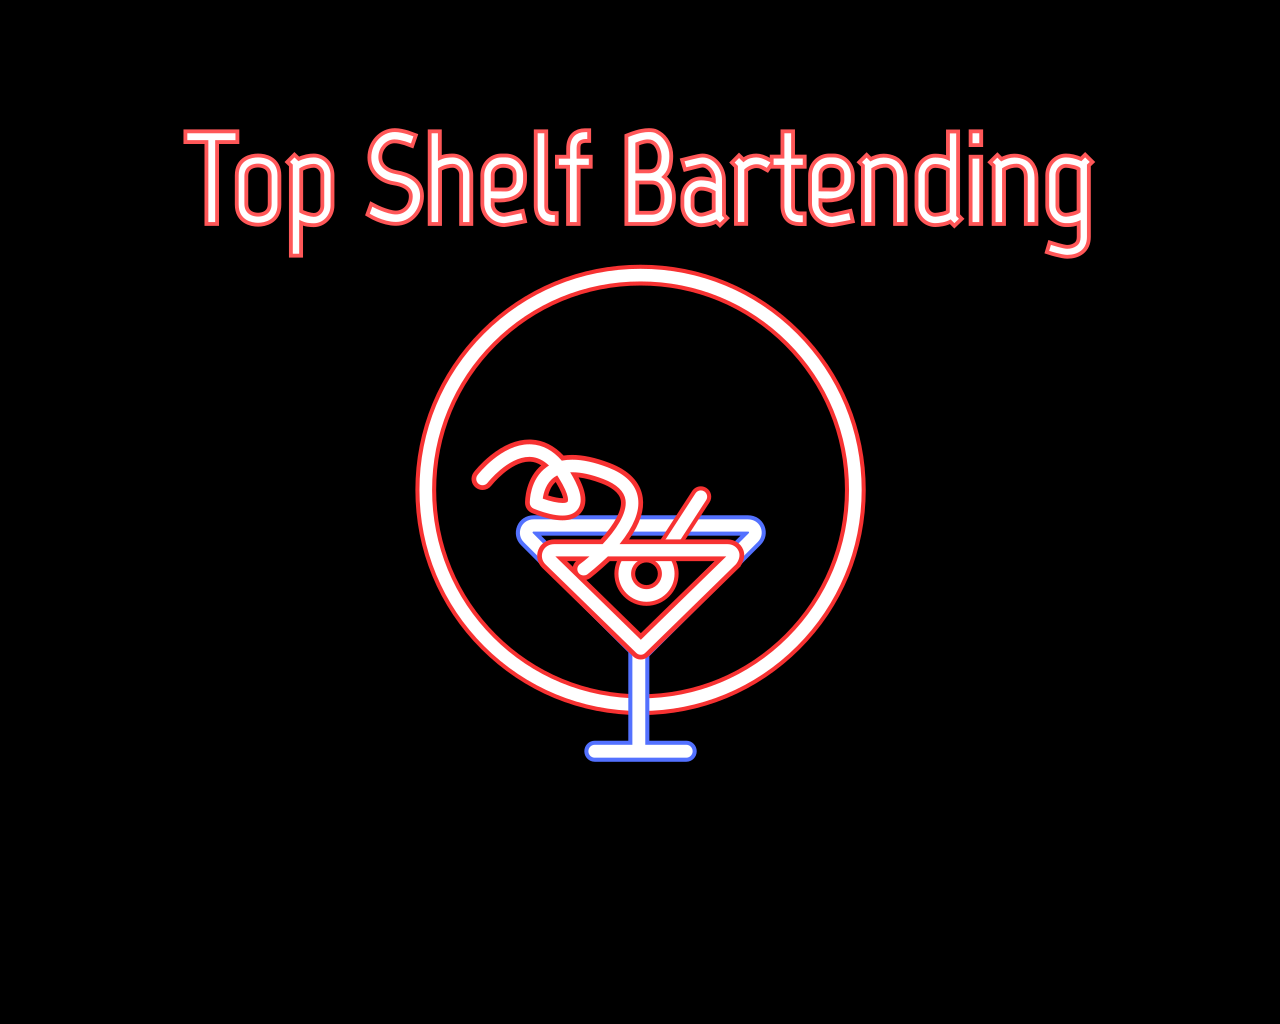 Top Shelf Bartending - professional bartending service pittsburgh pa - professional bartenders wilmington nc - wedding bartending service